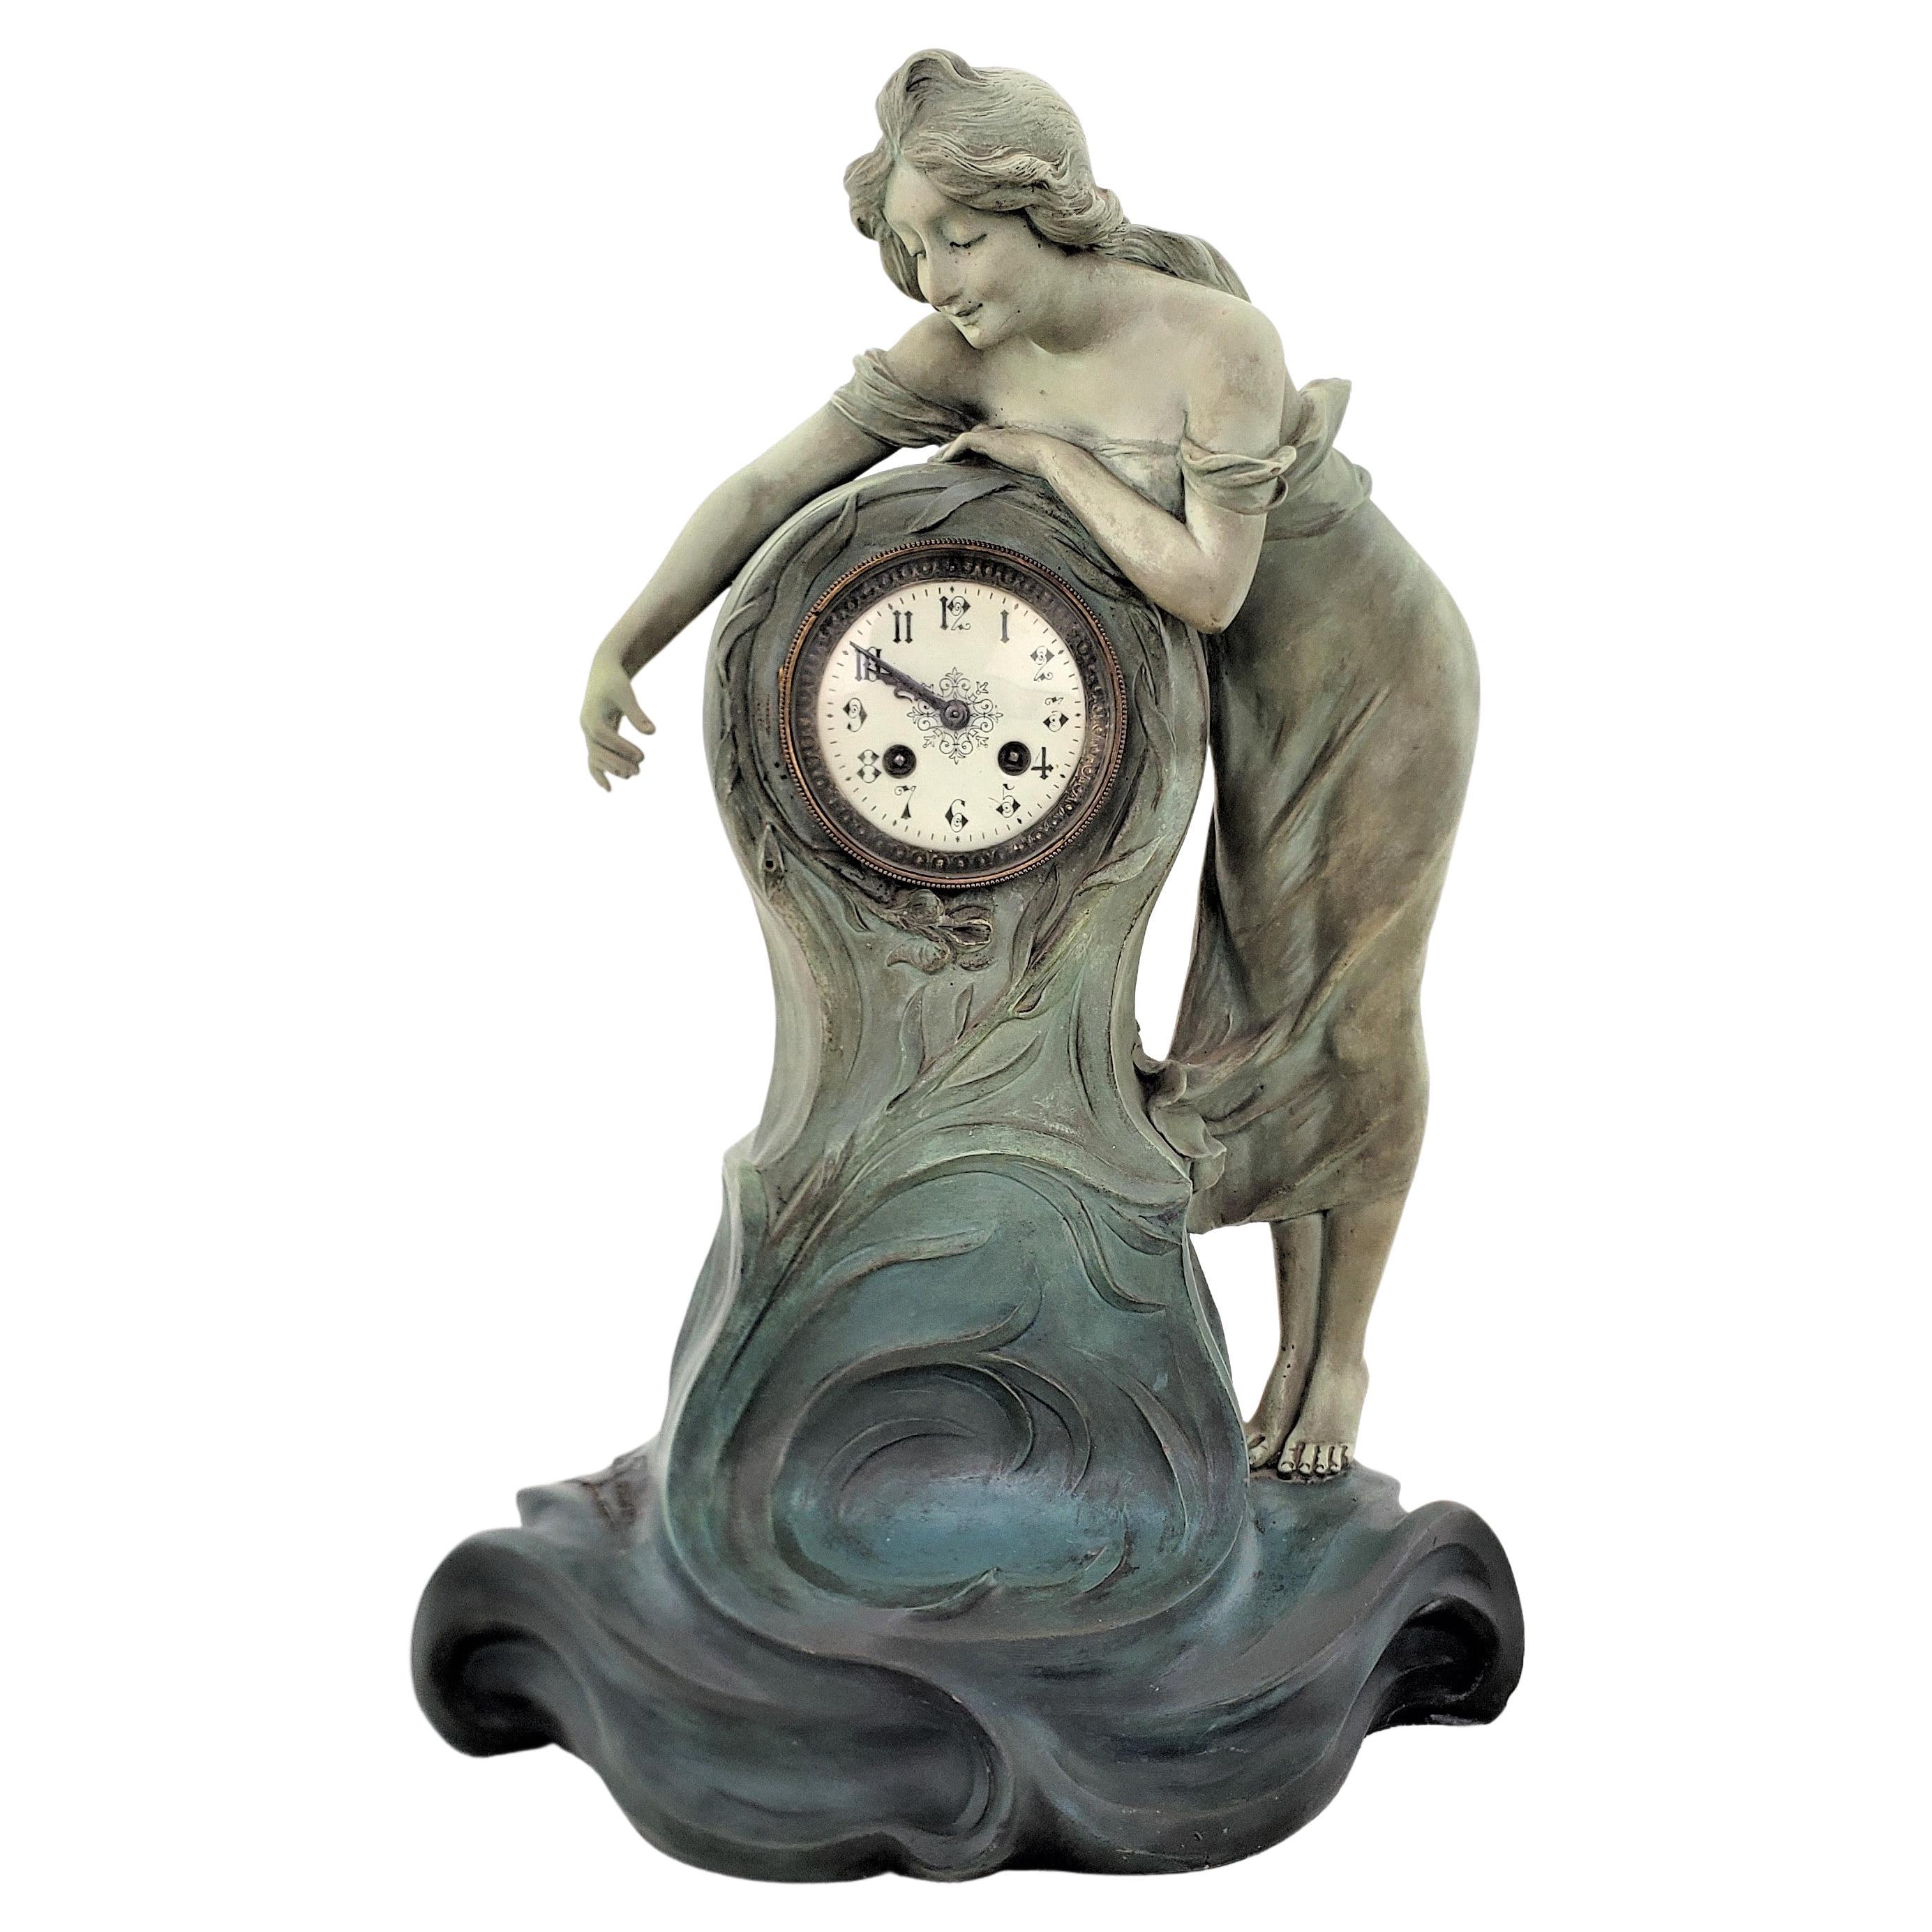 Aristede De Ranieri firmato Art Nouveau Sculptural Mantel or Table Clock